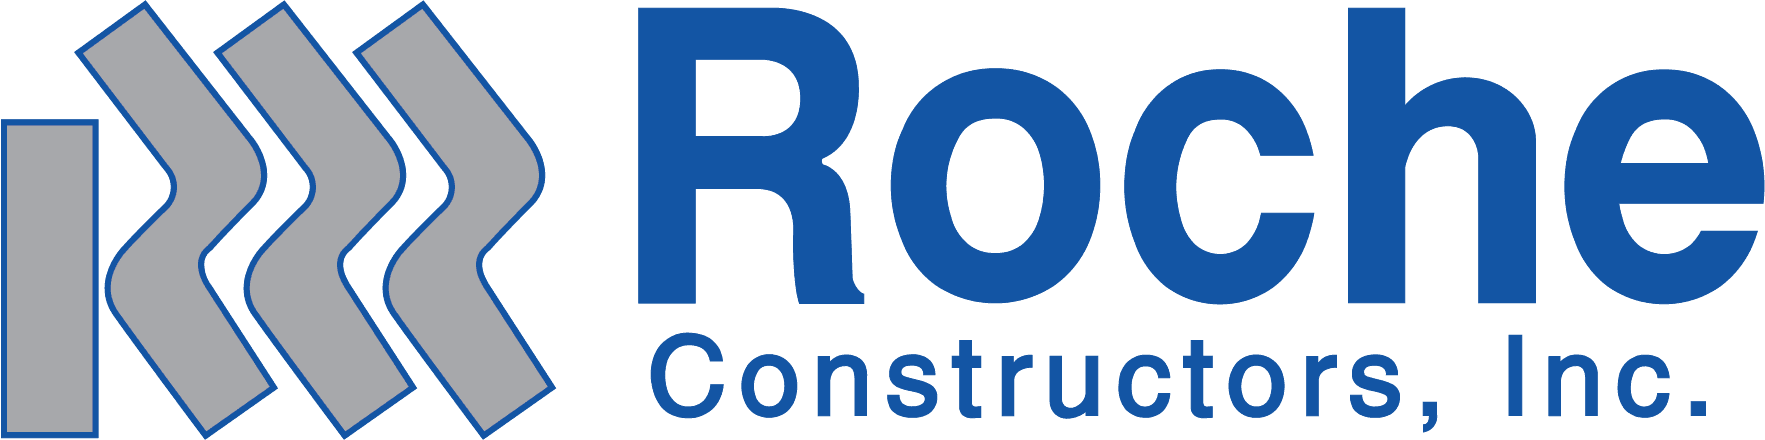 Roche Constructors